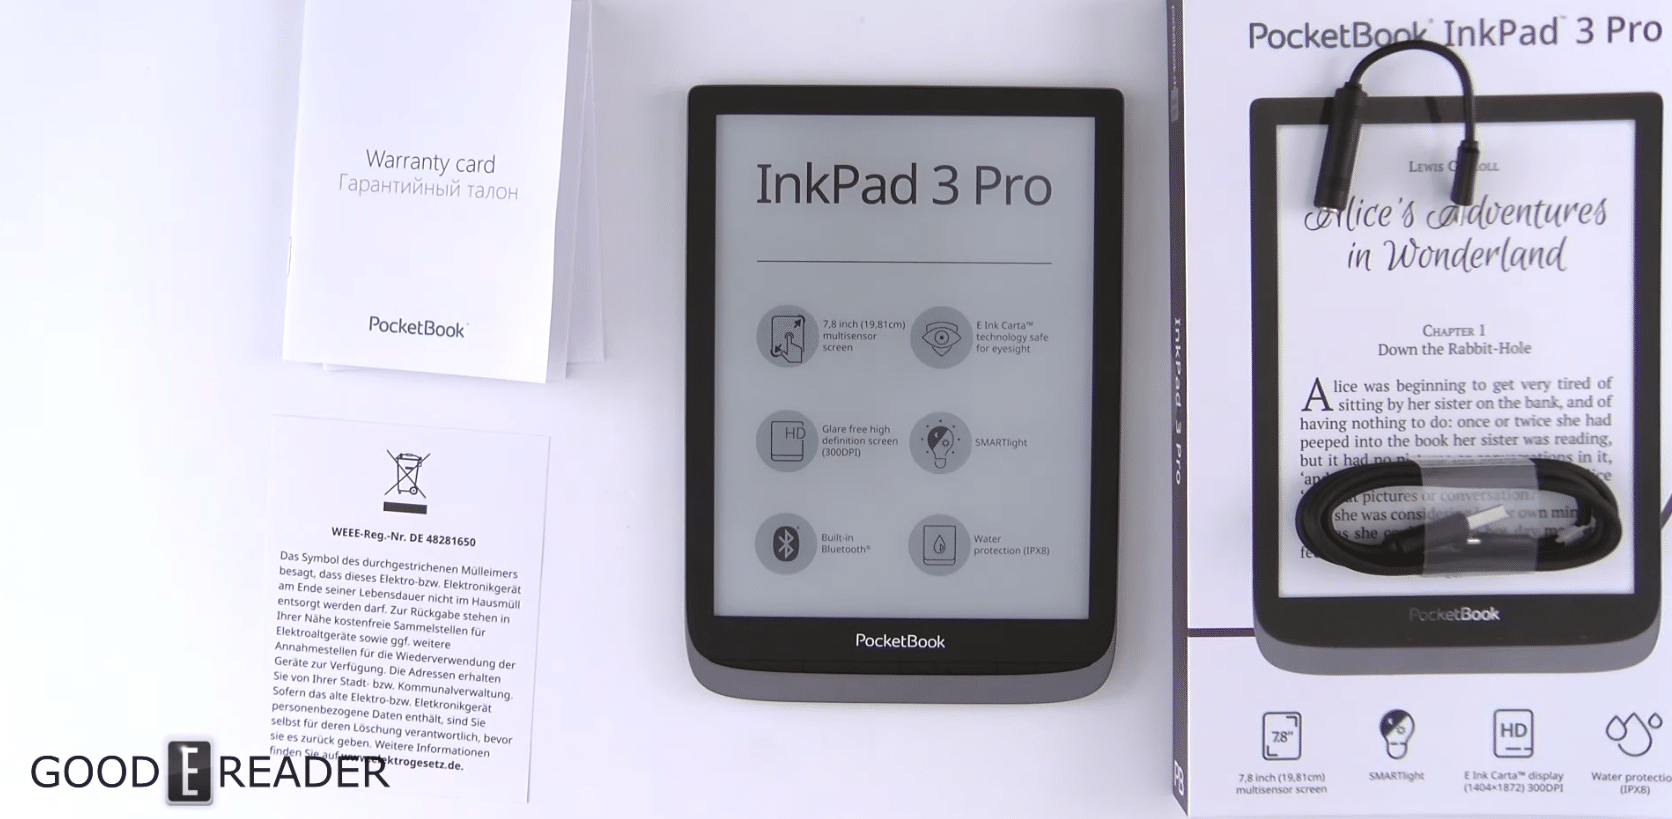 Membuka kotak Pocketbook Inkpad Pro baru